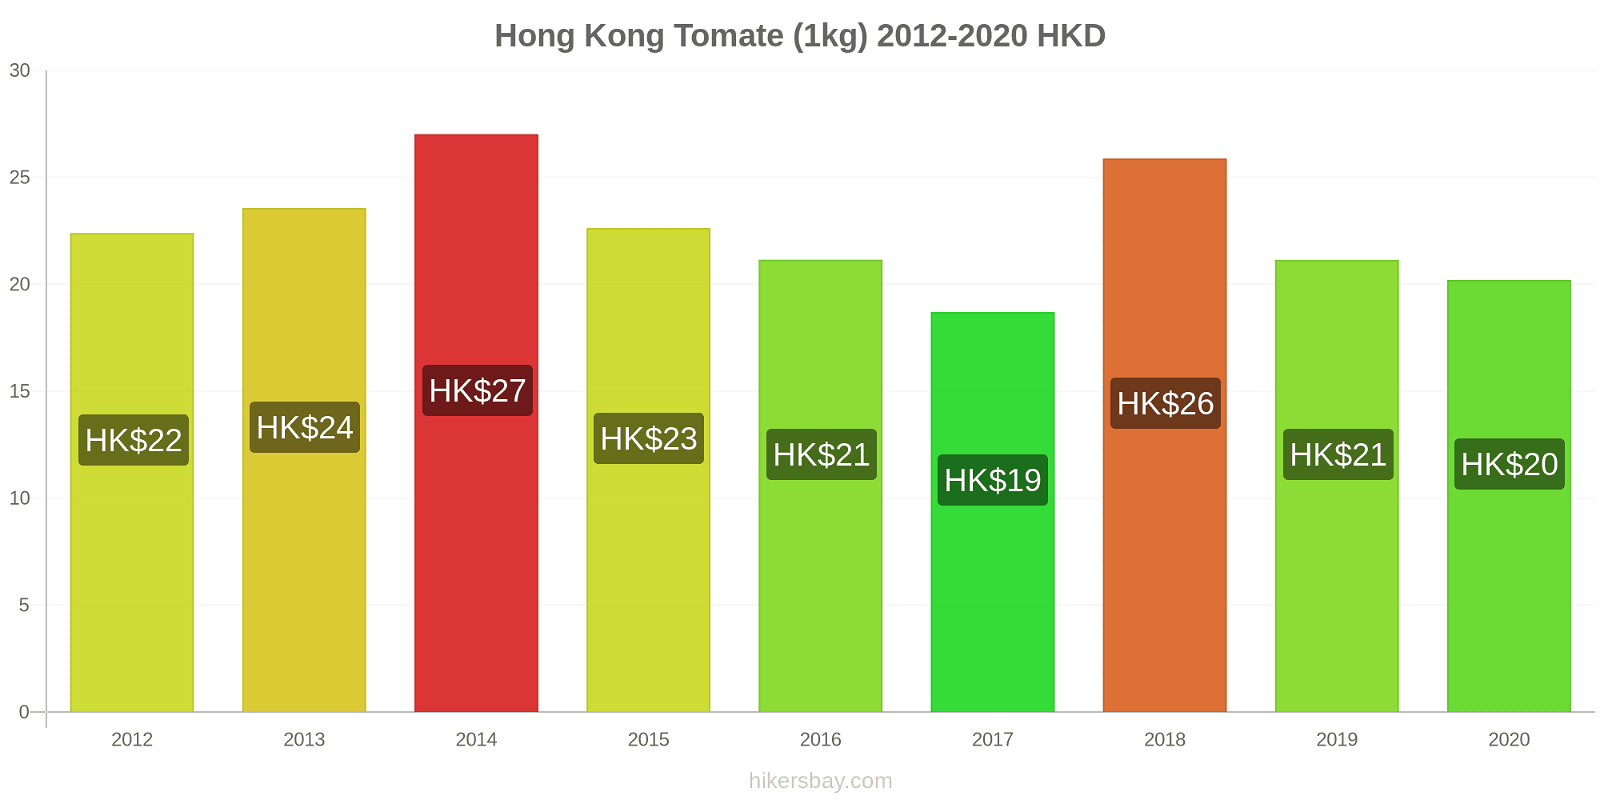 Hong Kong changements de prix Tomate (1kg) hikersbay.com